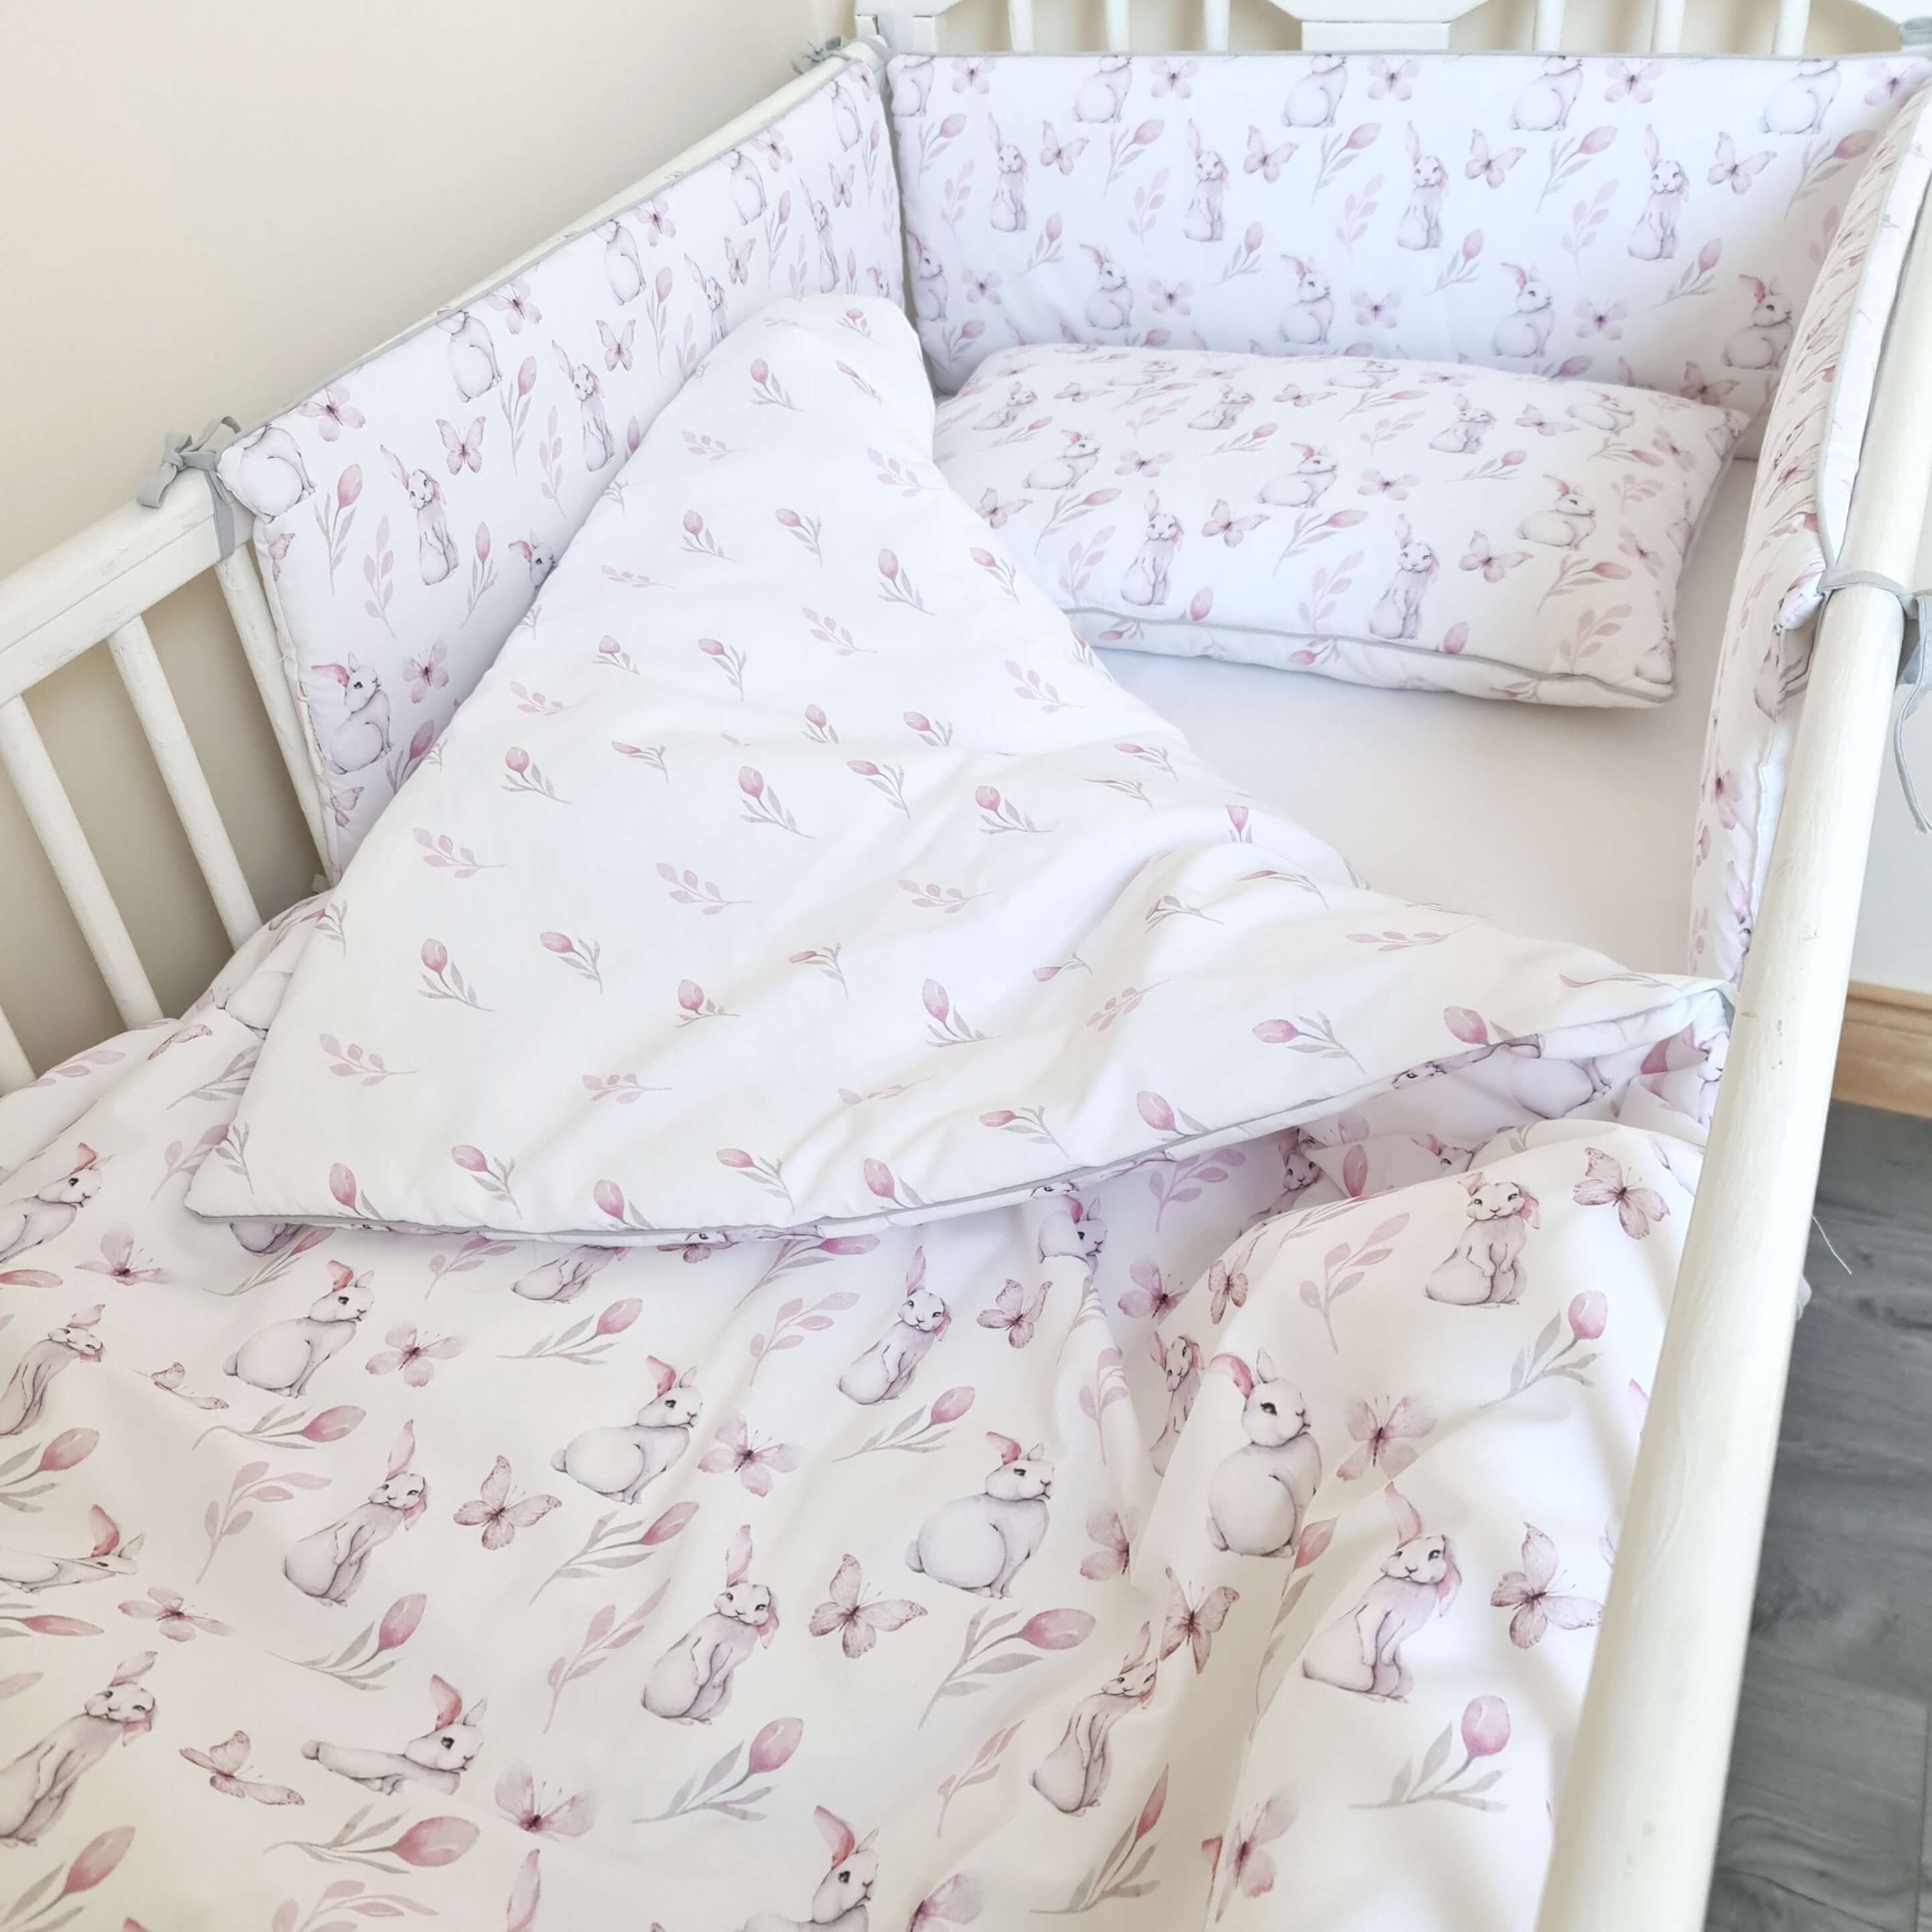 Toddler cot bed kit- 3 pc’s set duvet & pillow plus cot bed bumper- Bunnies & Butterflies